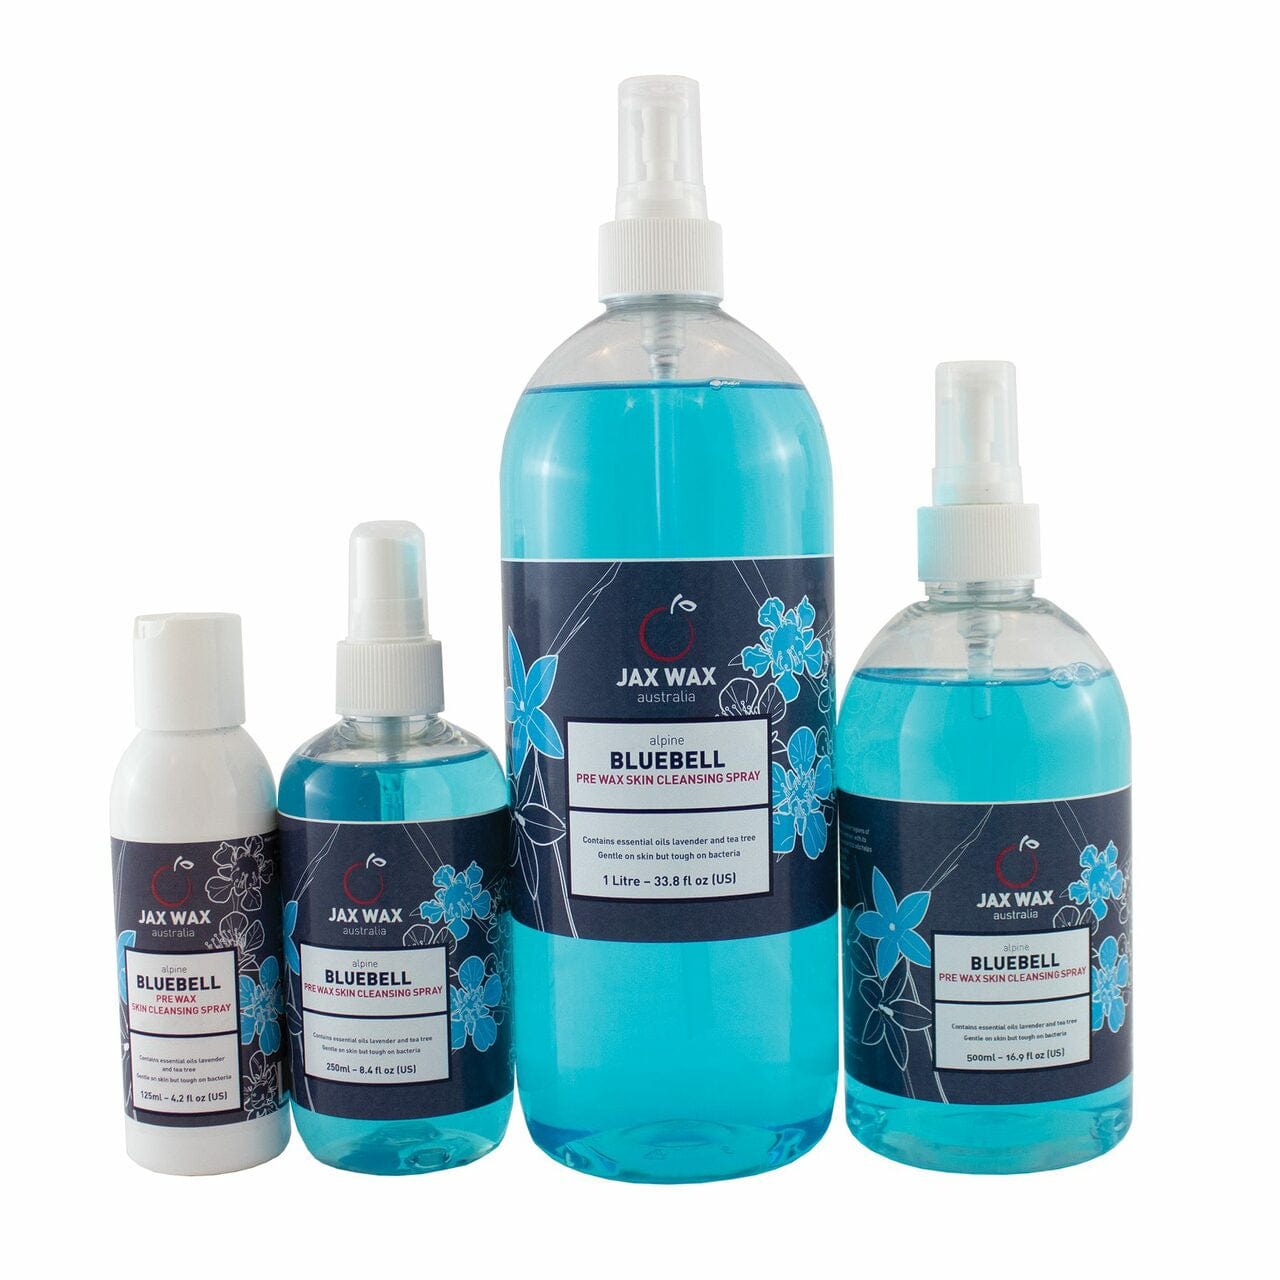 Alpine Bluebell Pre Wax Skin Cleansing Spray 250ml Beauty - Jax Wax - Luxe Pacifique